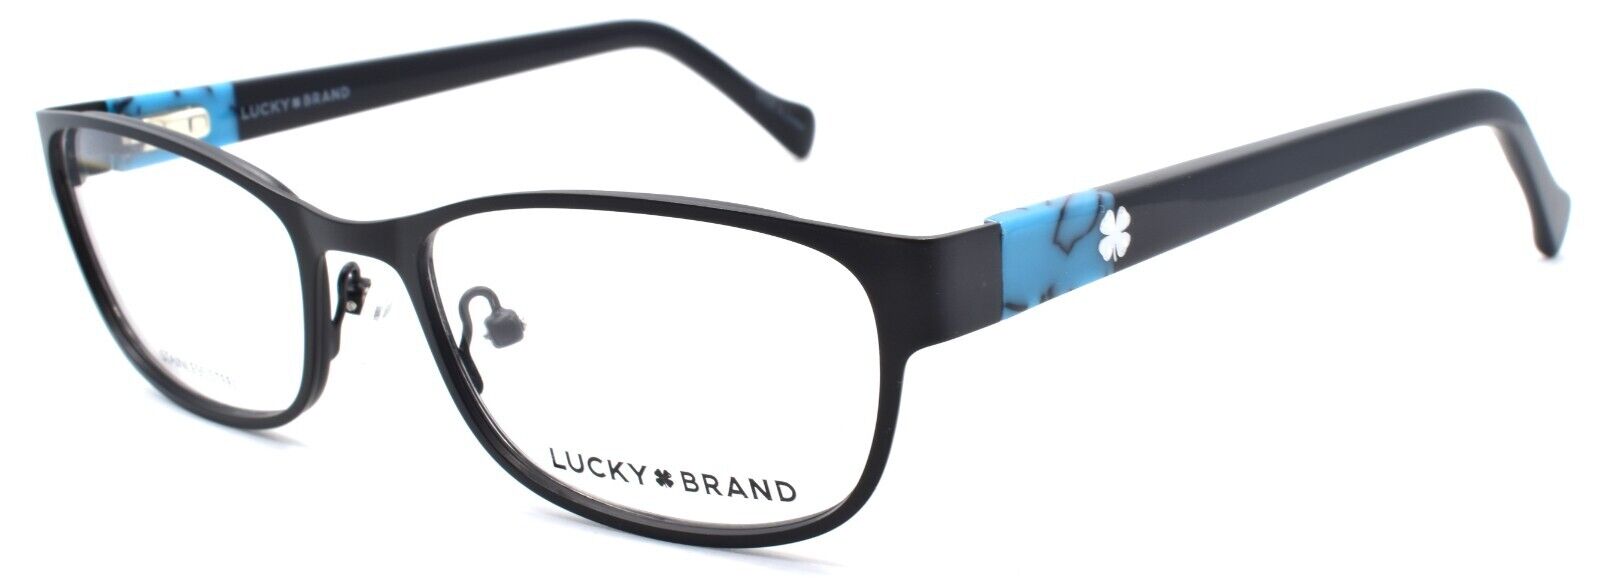 1-LUCKY BRAND D121 Women's Eyeglasses Frames 51-17-140 Black / Blue-751286341980-IKSpecs